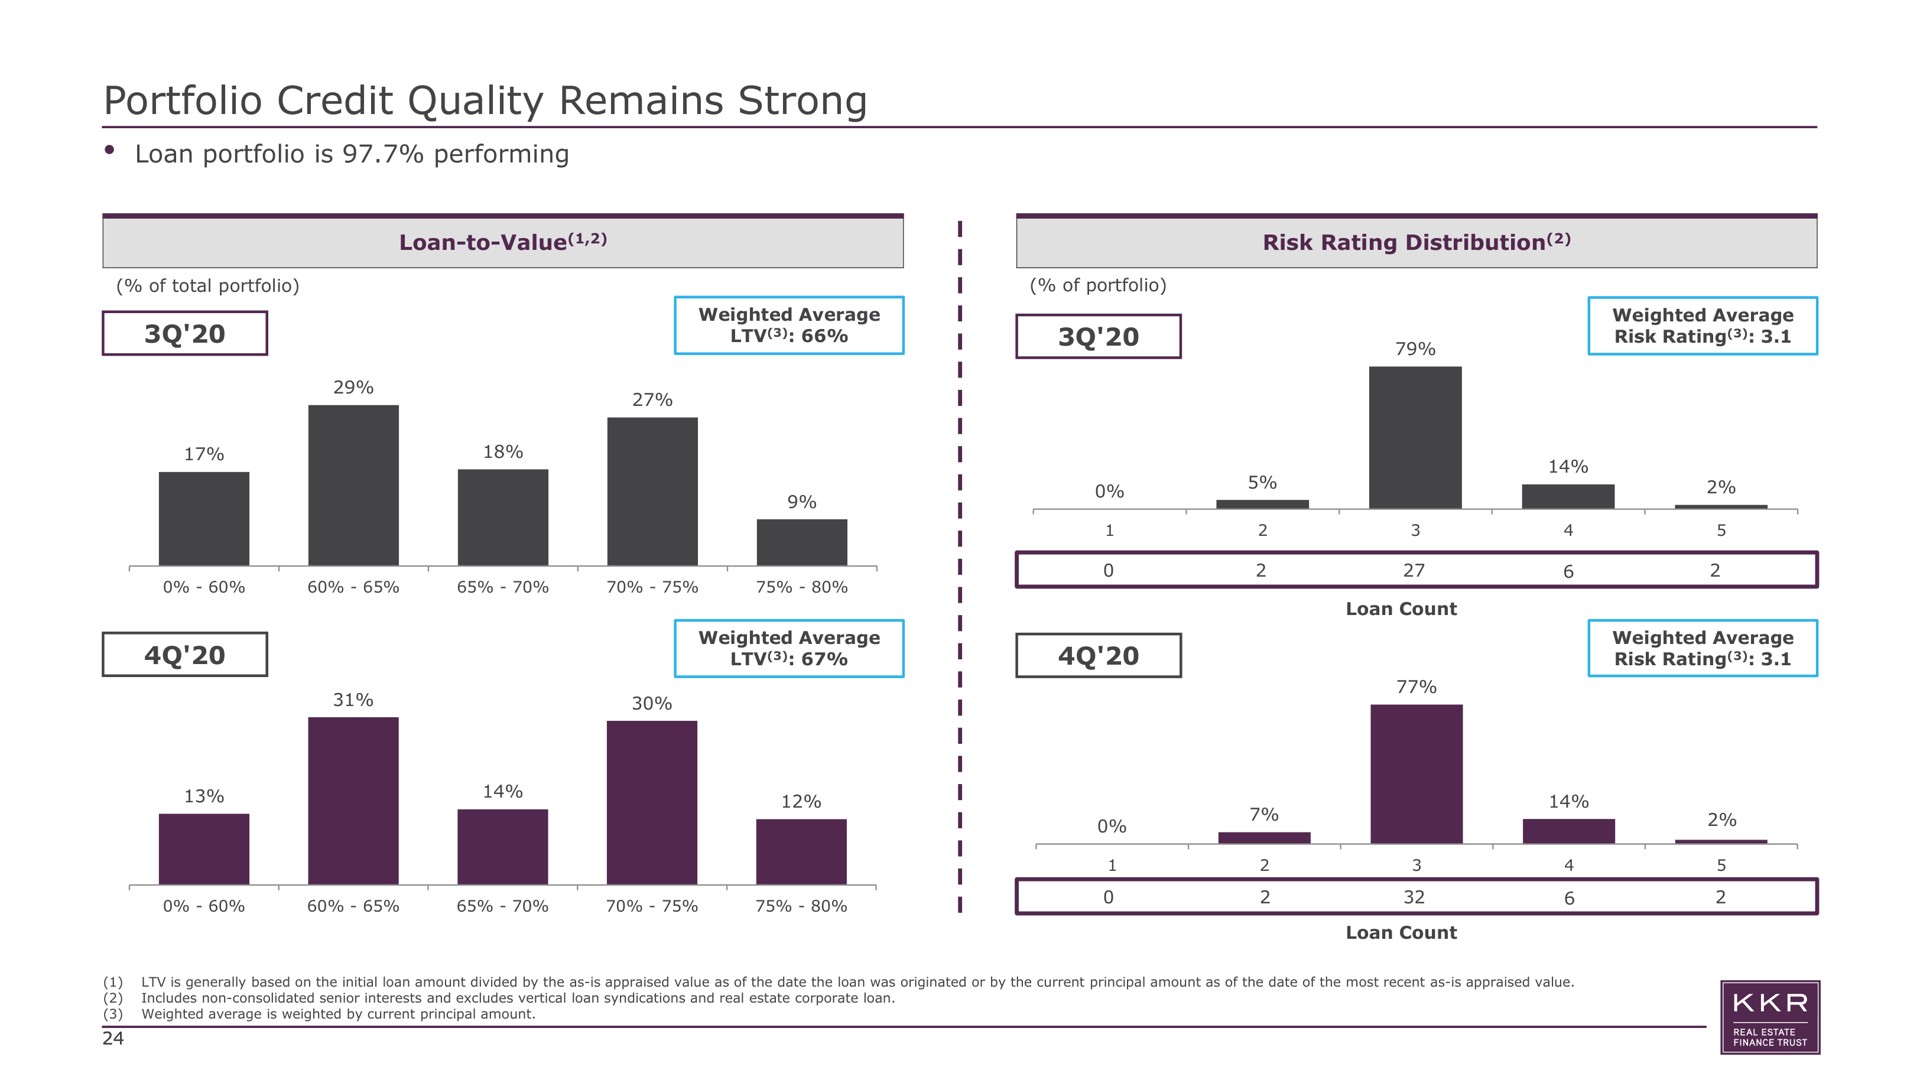 portfolio credit quality remains strong loan portfolio is performing risk rating distribution | KKR Real Estate Finance Trust